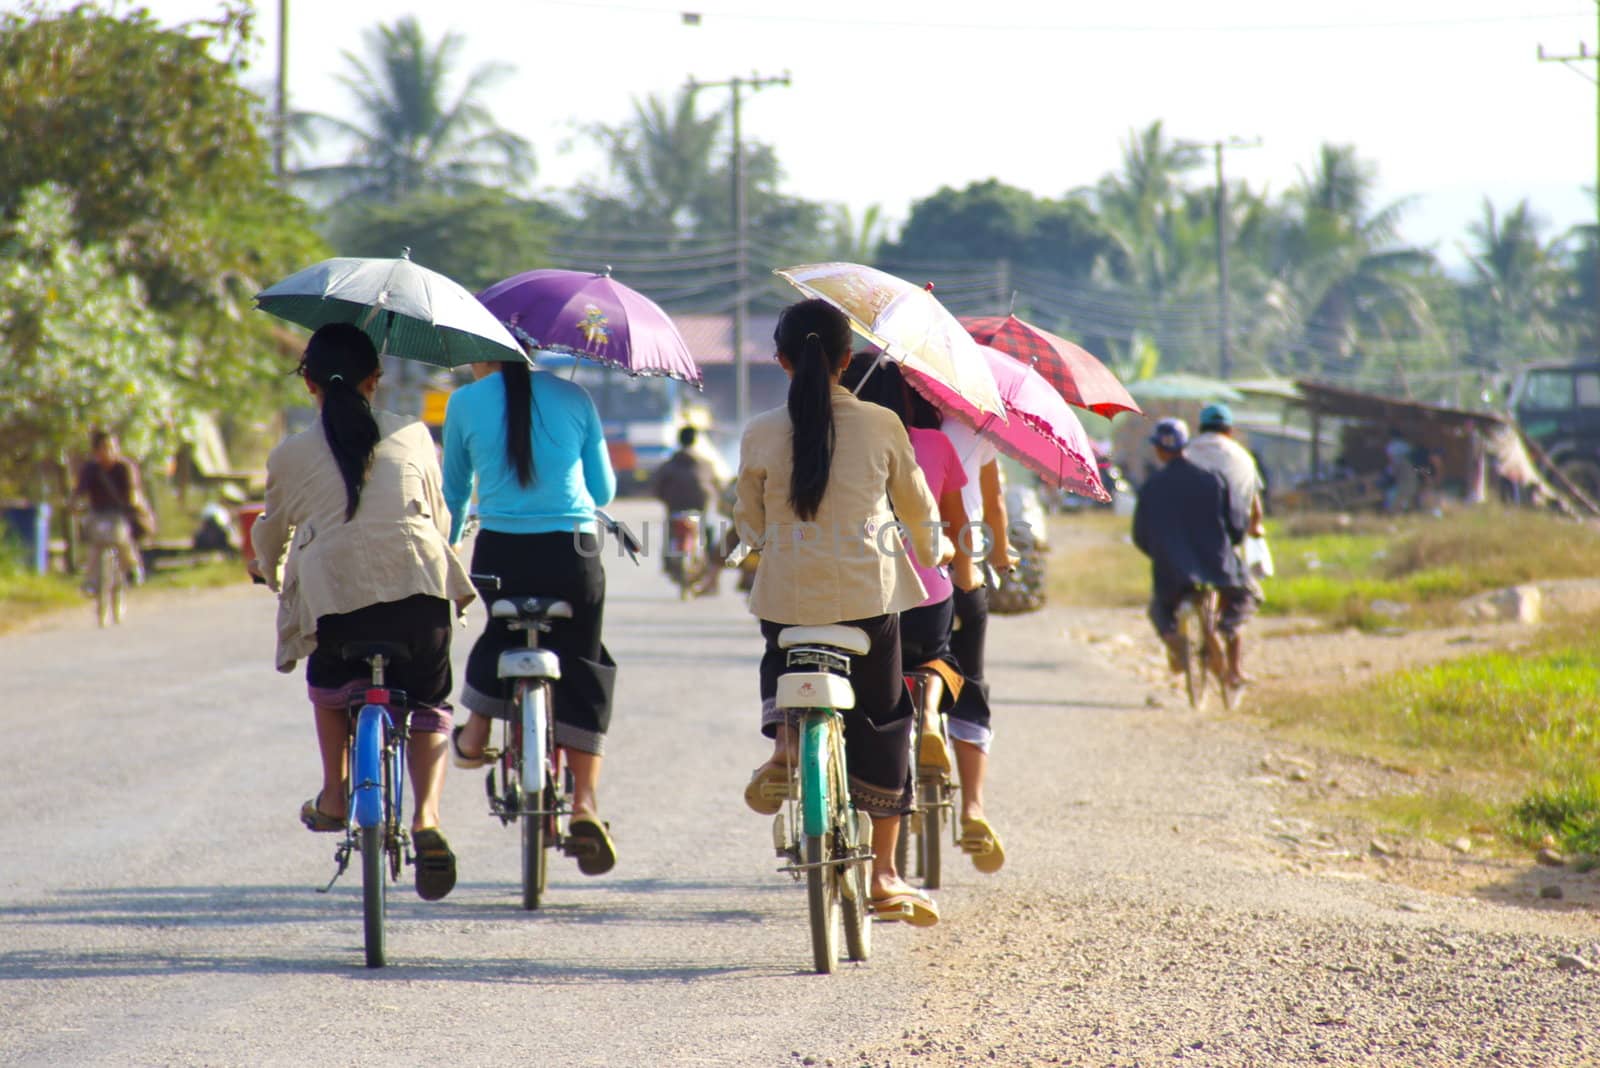 Umbrellas and Bikes A by photocdn39